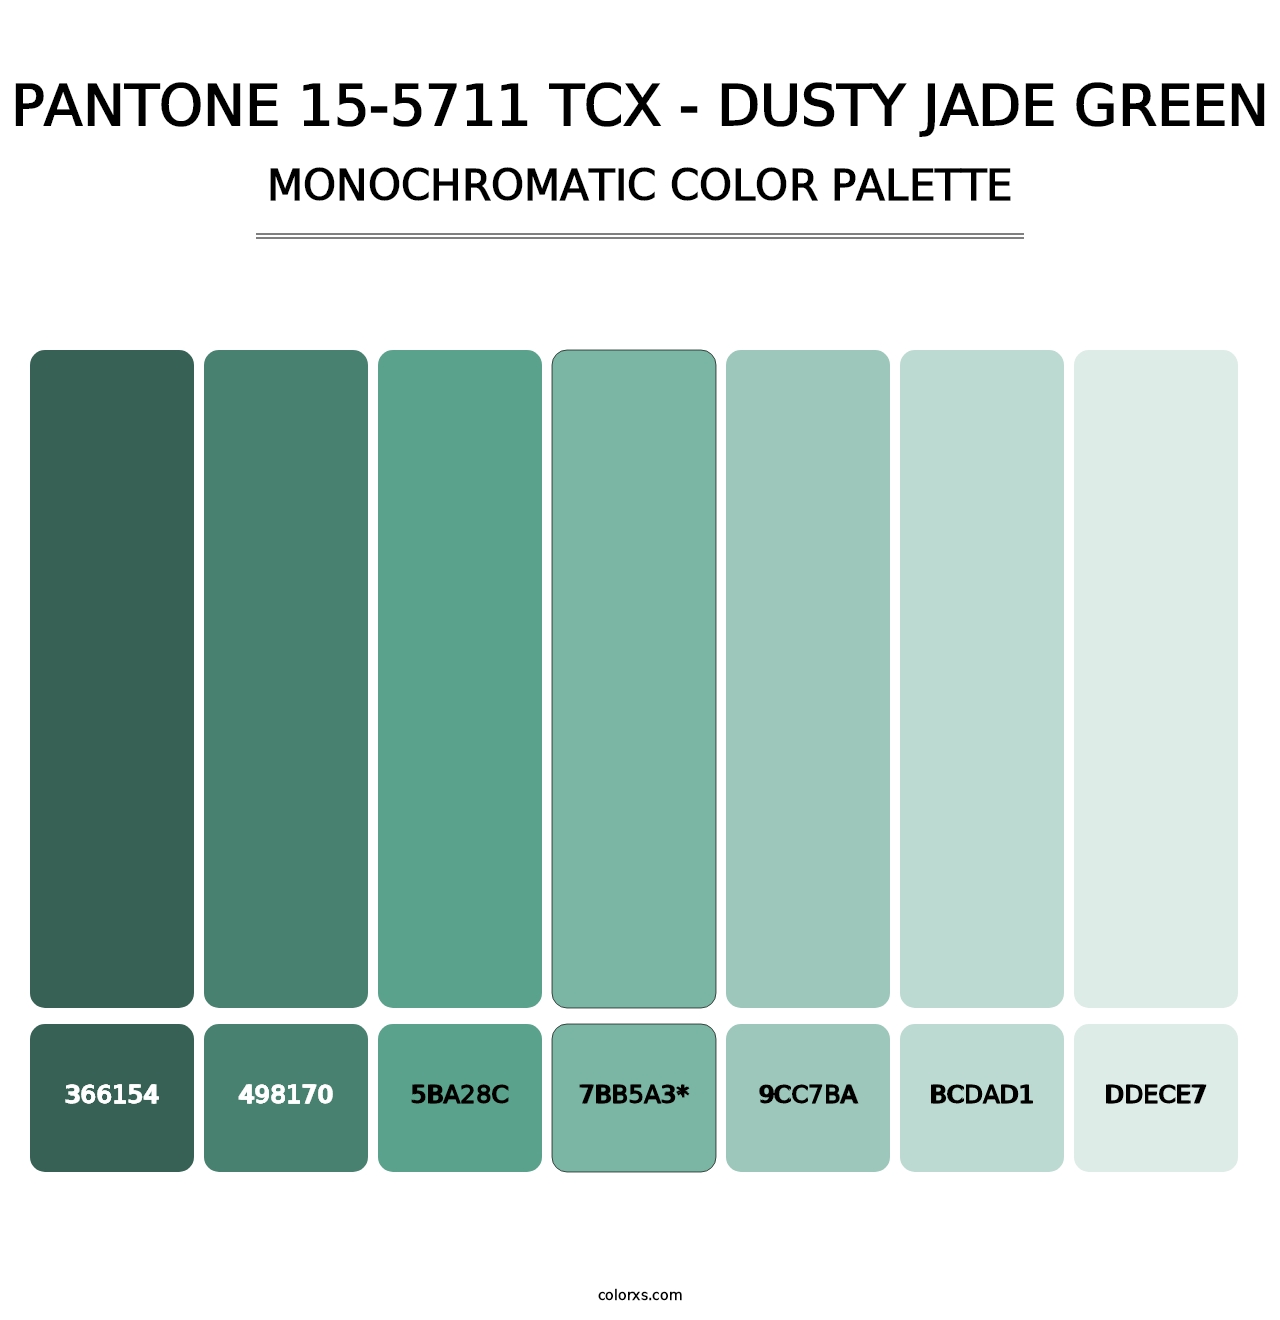 PANTONE 15-5711 TCX - Dusty Jade Green - Monochromatic Color Palette